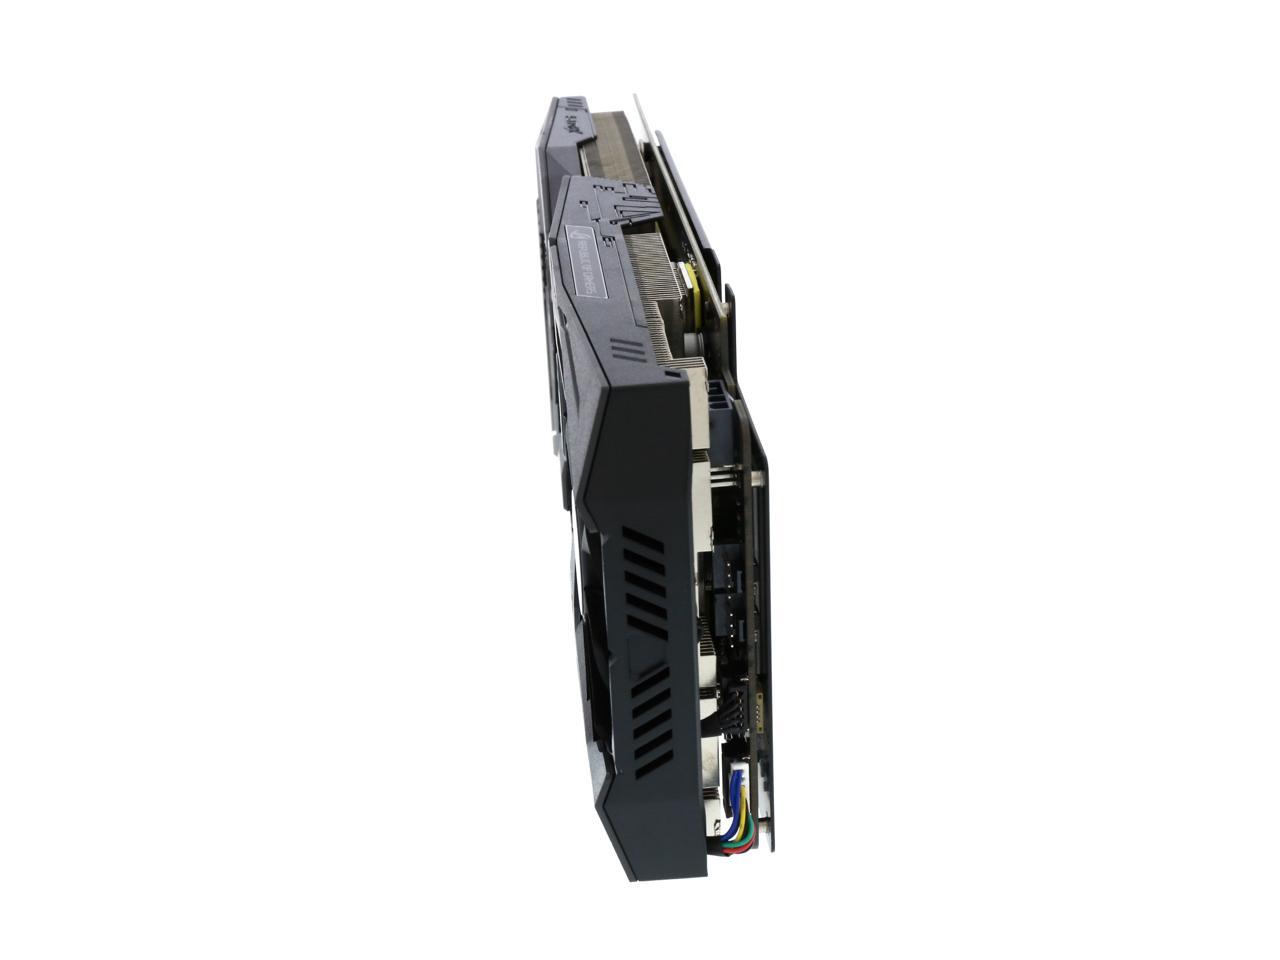 Used - Like New: ASUS ROG Radeon RX 480 Video Card STRIX-RX480-O8G 